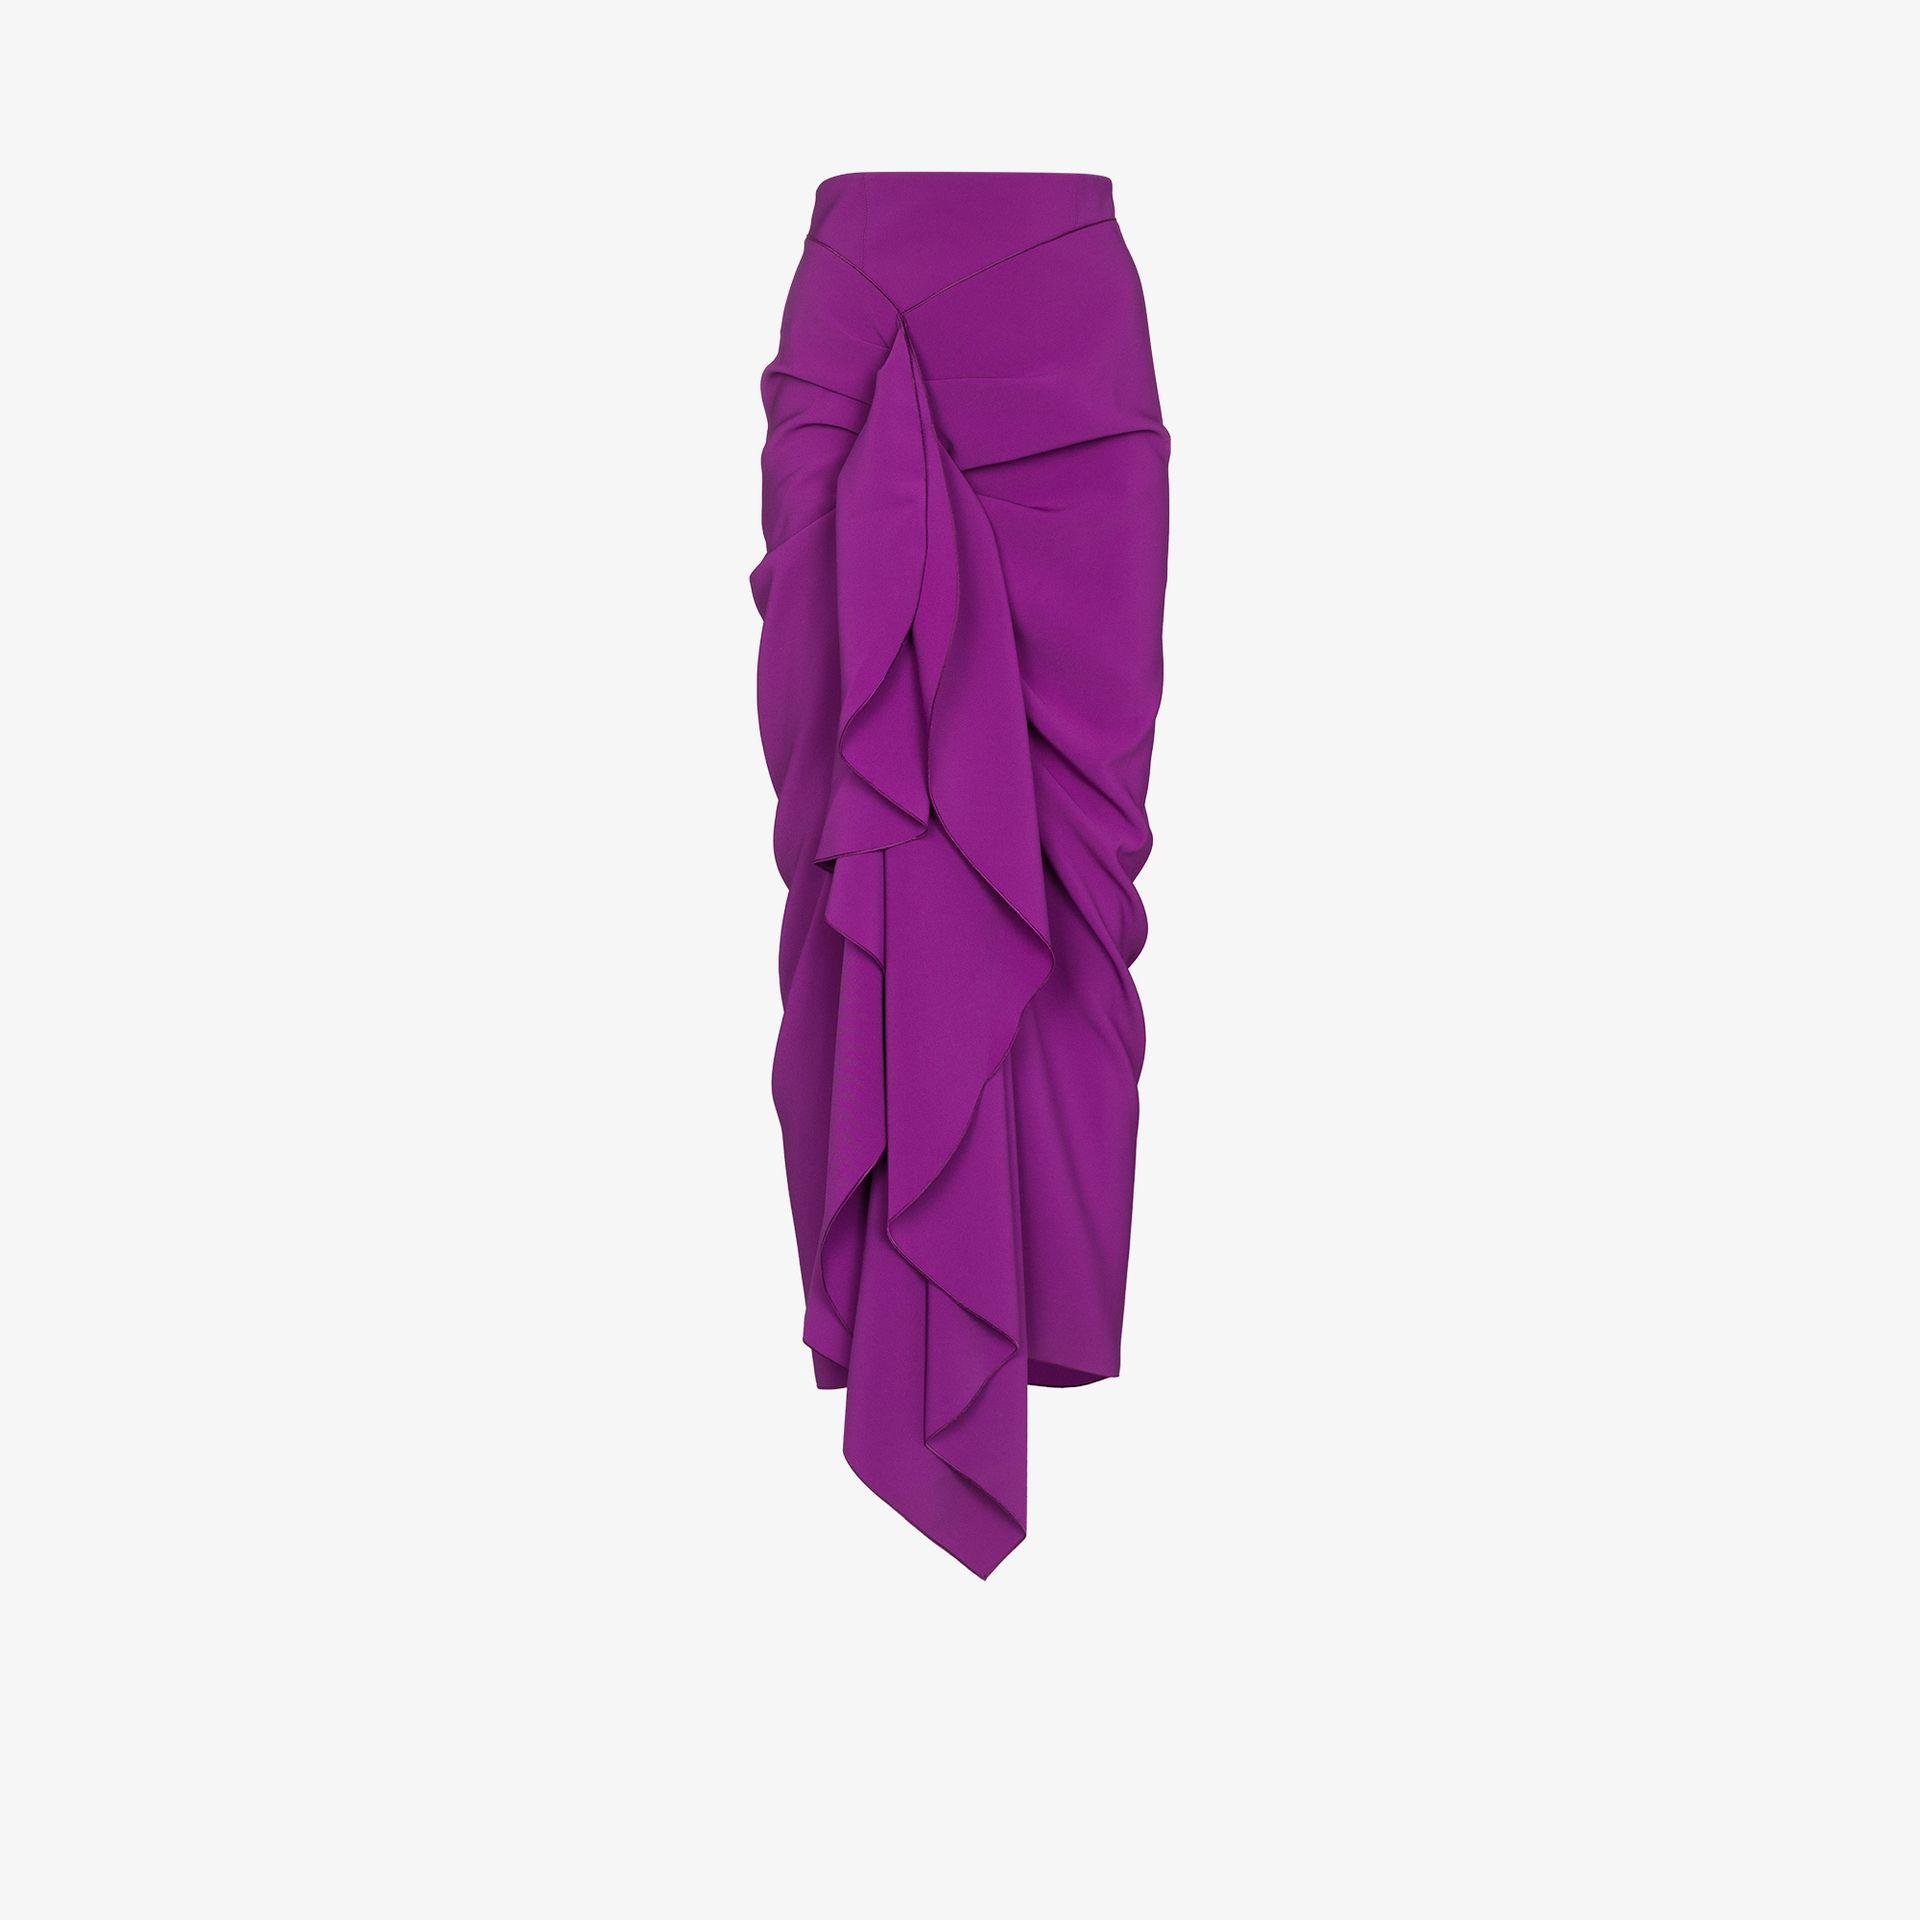 Solace London Giana Draped Skirt in Purple | Lyst